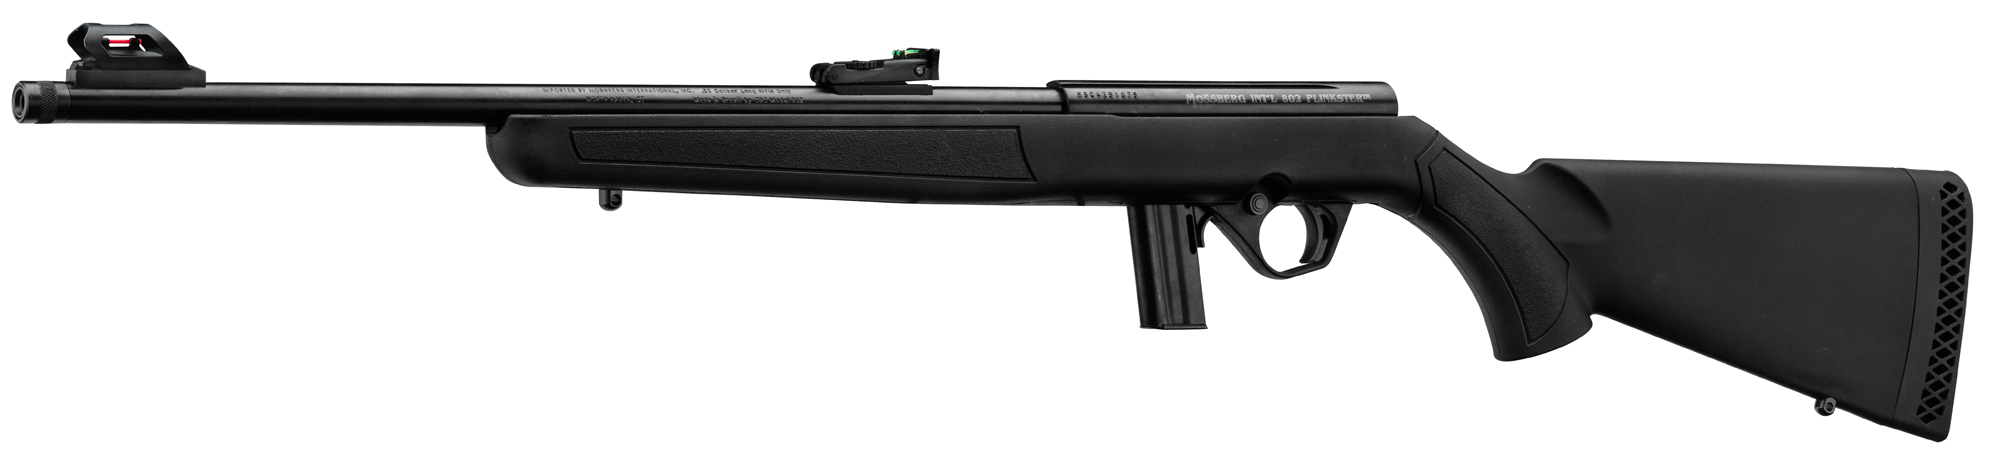 CR200-2 Carabine Mossberg Plinkster 802 synthétique noire cal.22 LR